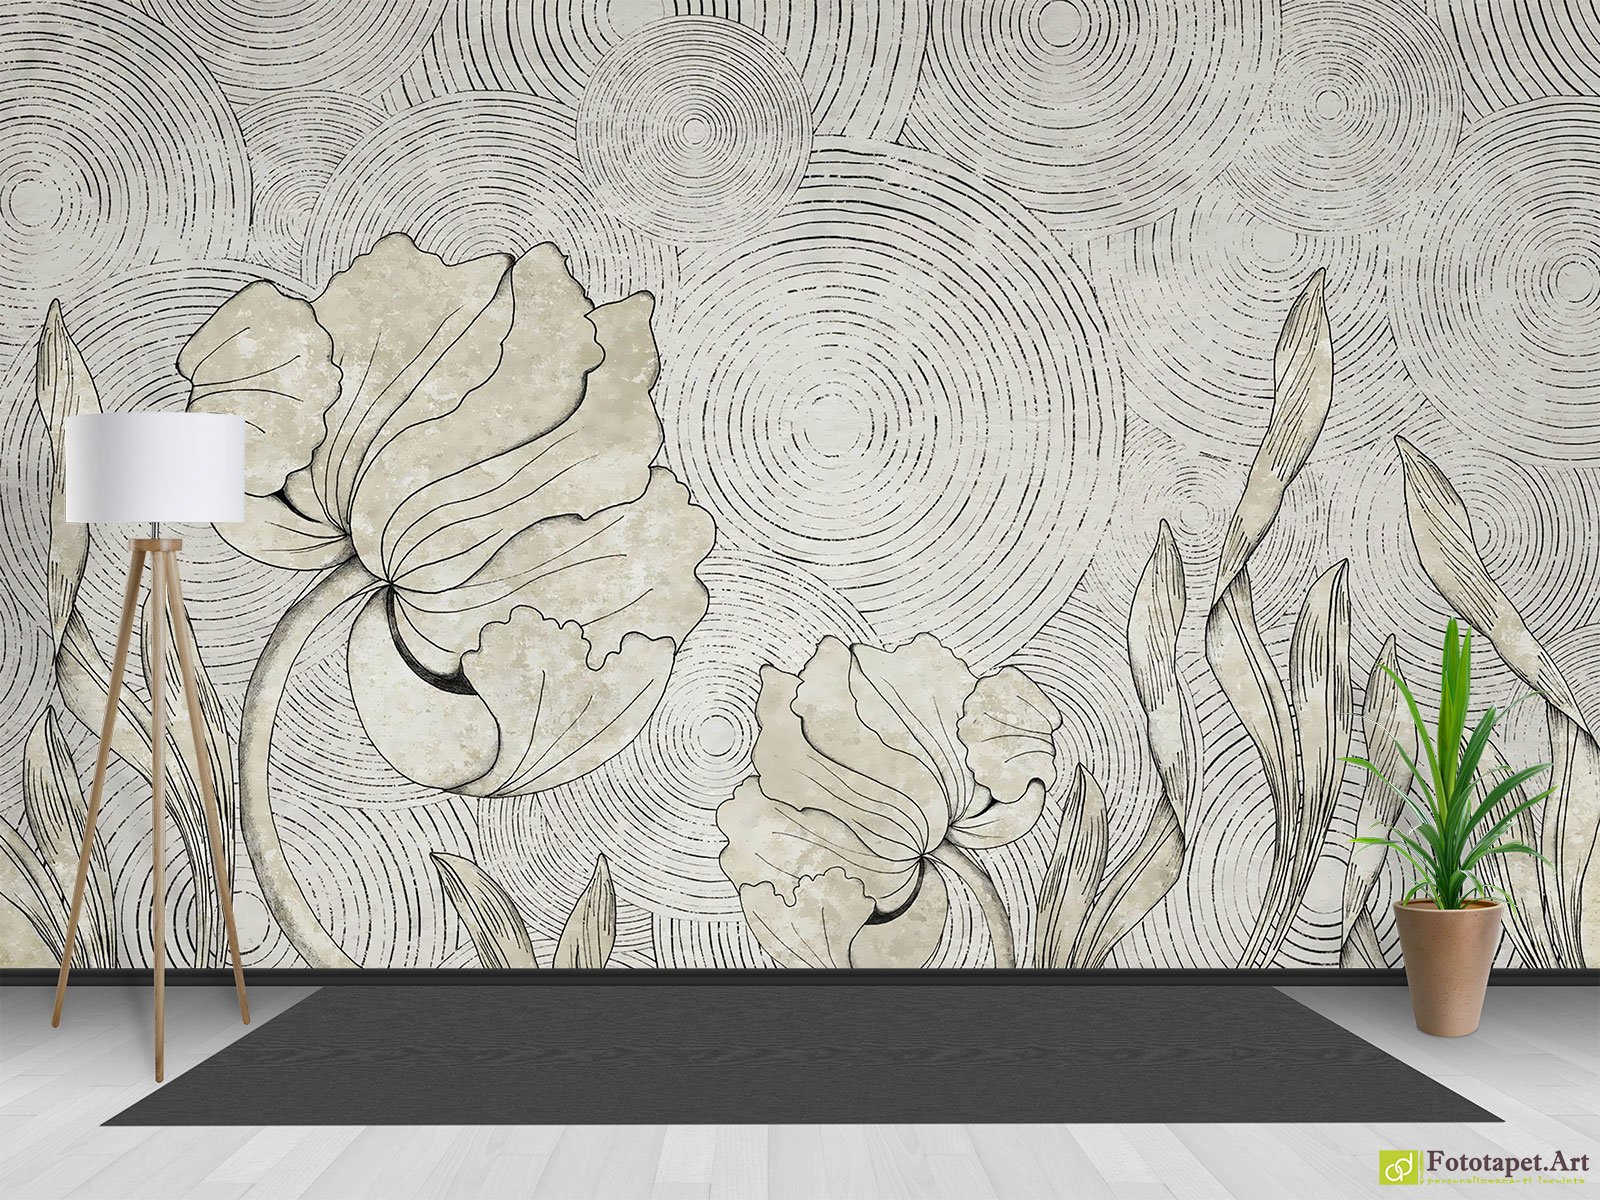 Retro Wallpaper & Vintage Wall Murals - Flowers and circles in gray tones |   Retro wallpaper, Digital Wallpaper mural, 3D Effect Wallpaper  for children's Buy Online